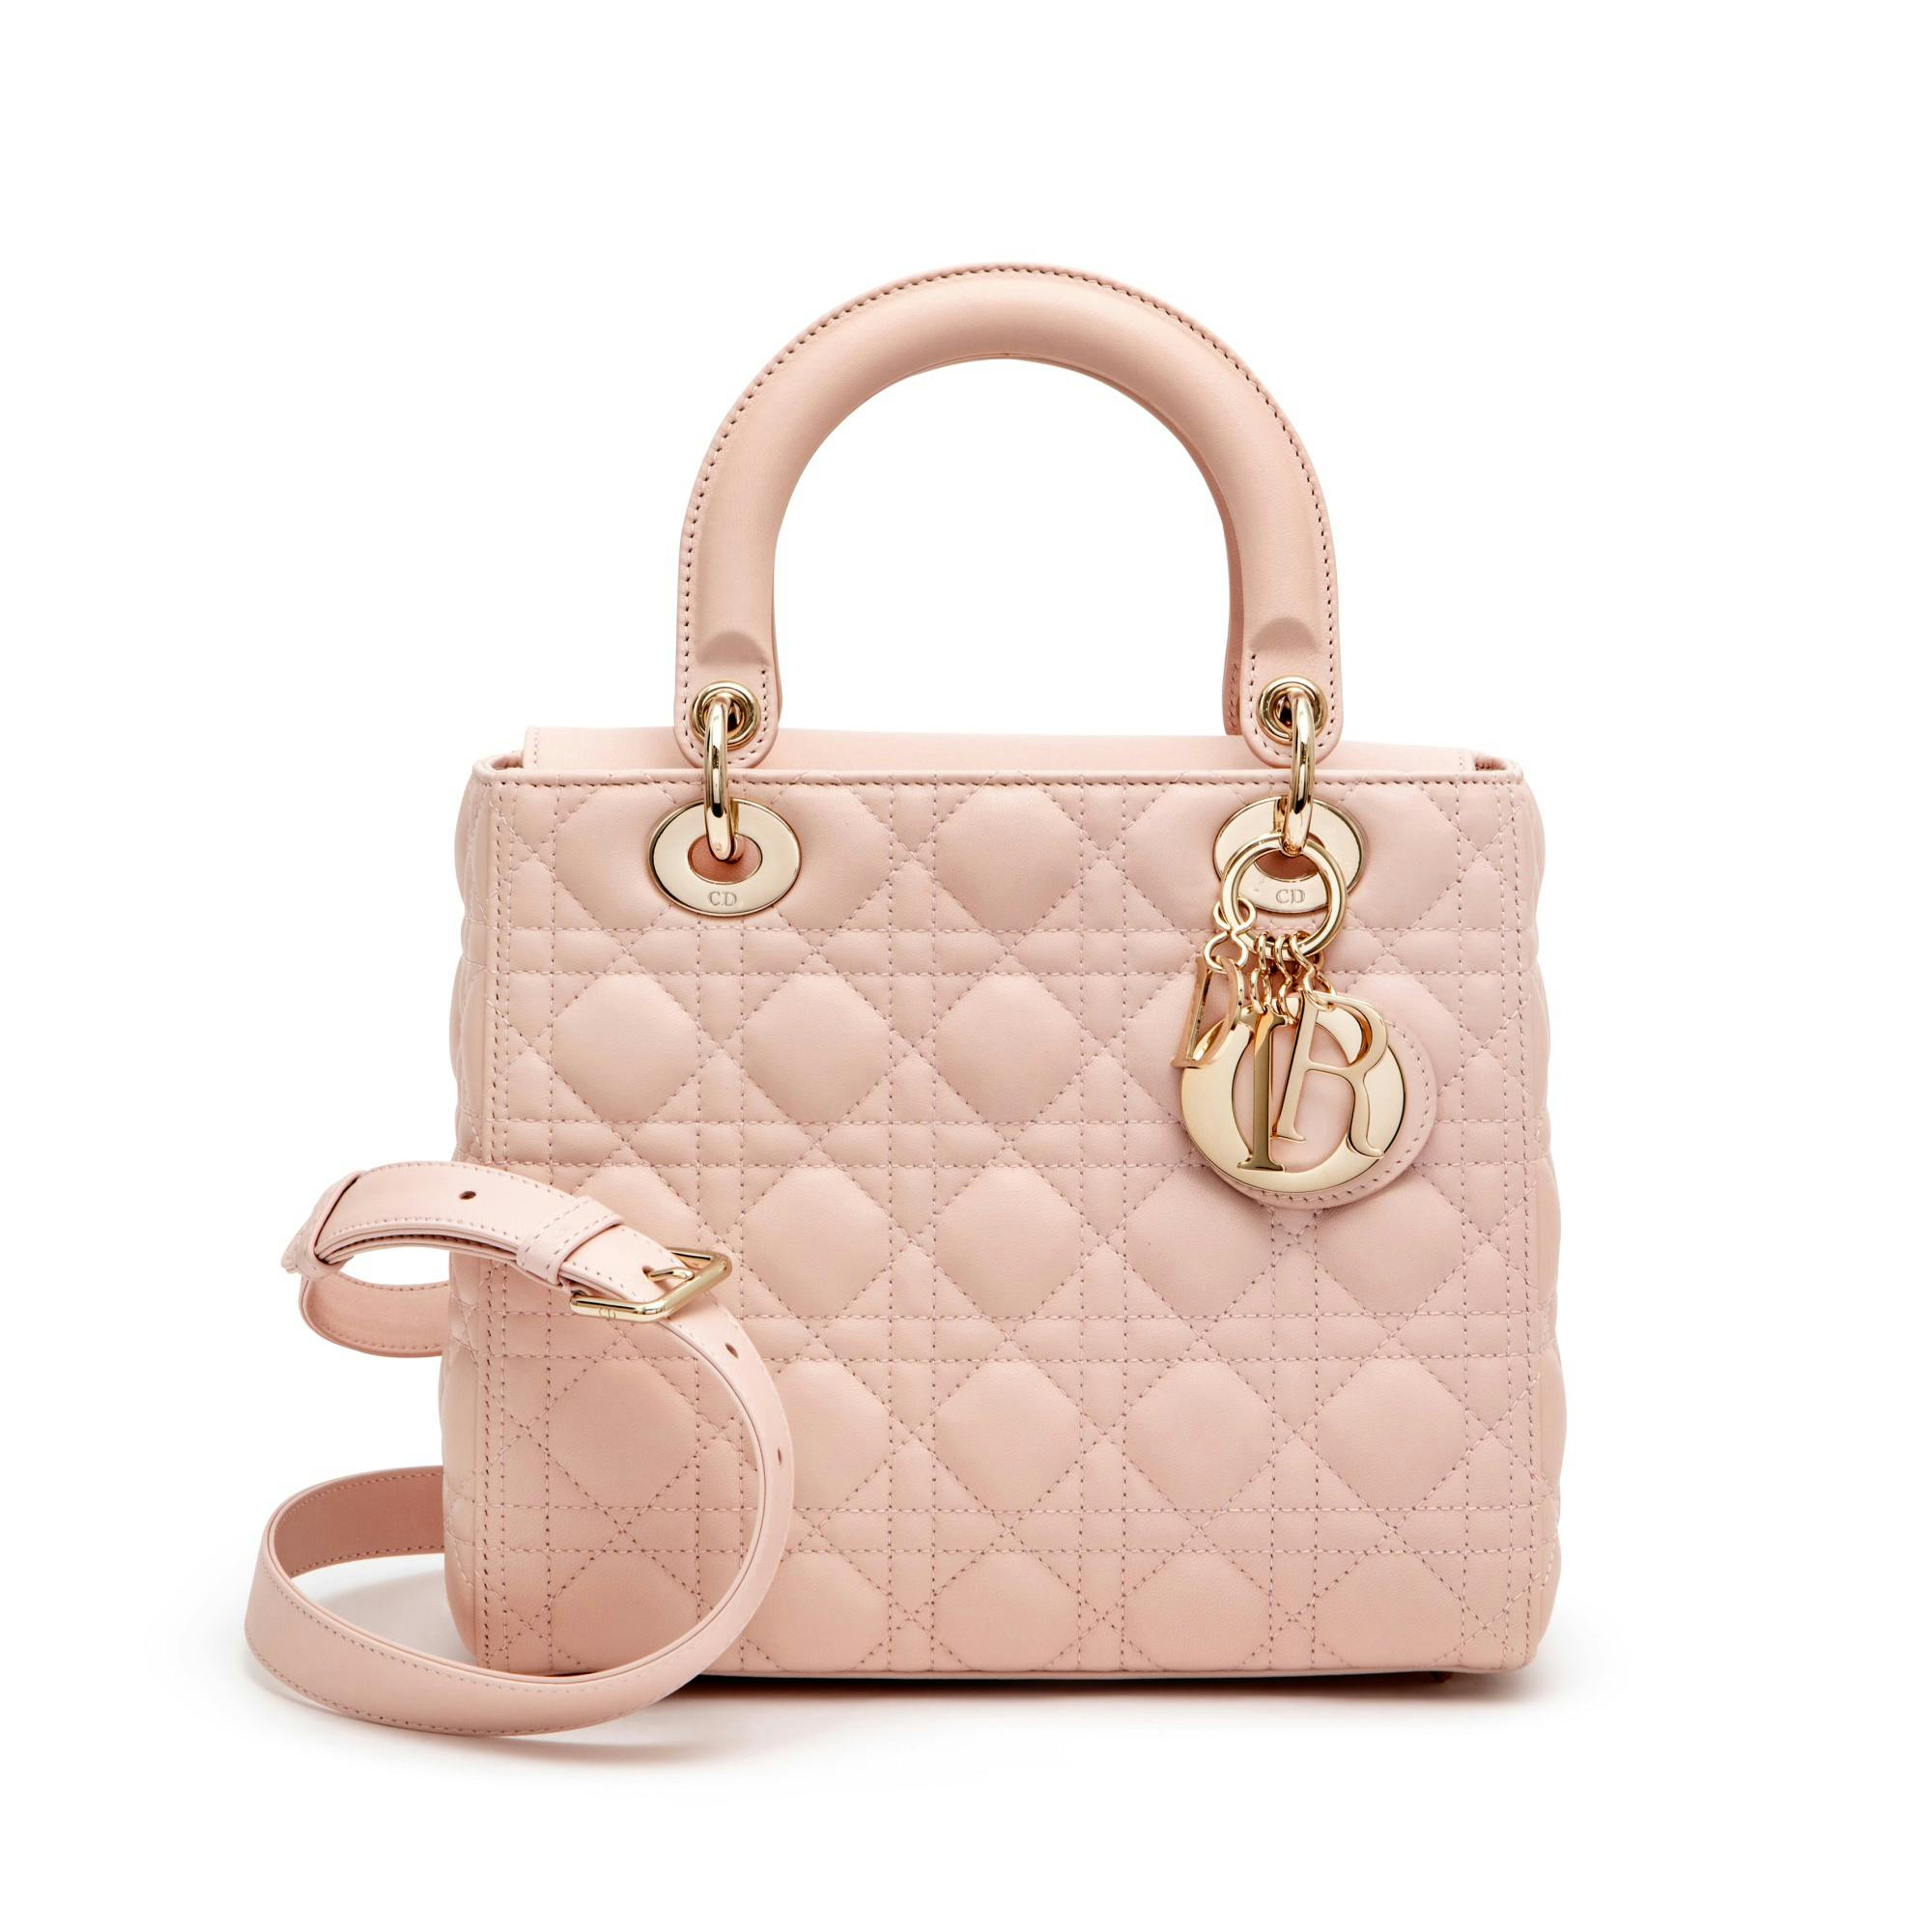 8 Bags That Were Named After Celebrities - Fashion Handbags Princess Diana  Hèrmes Birkin